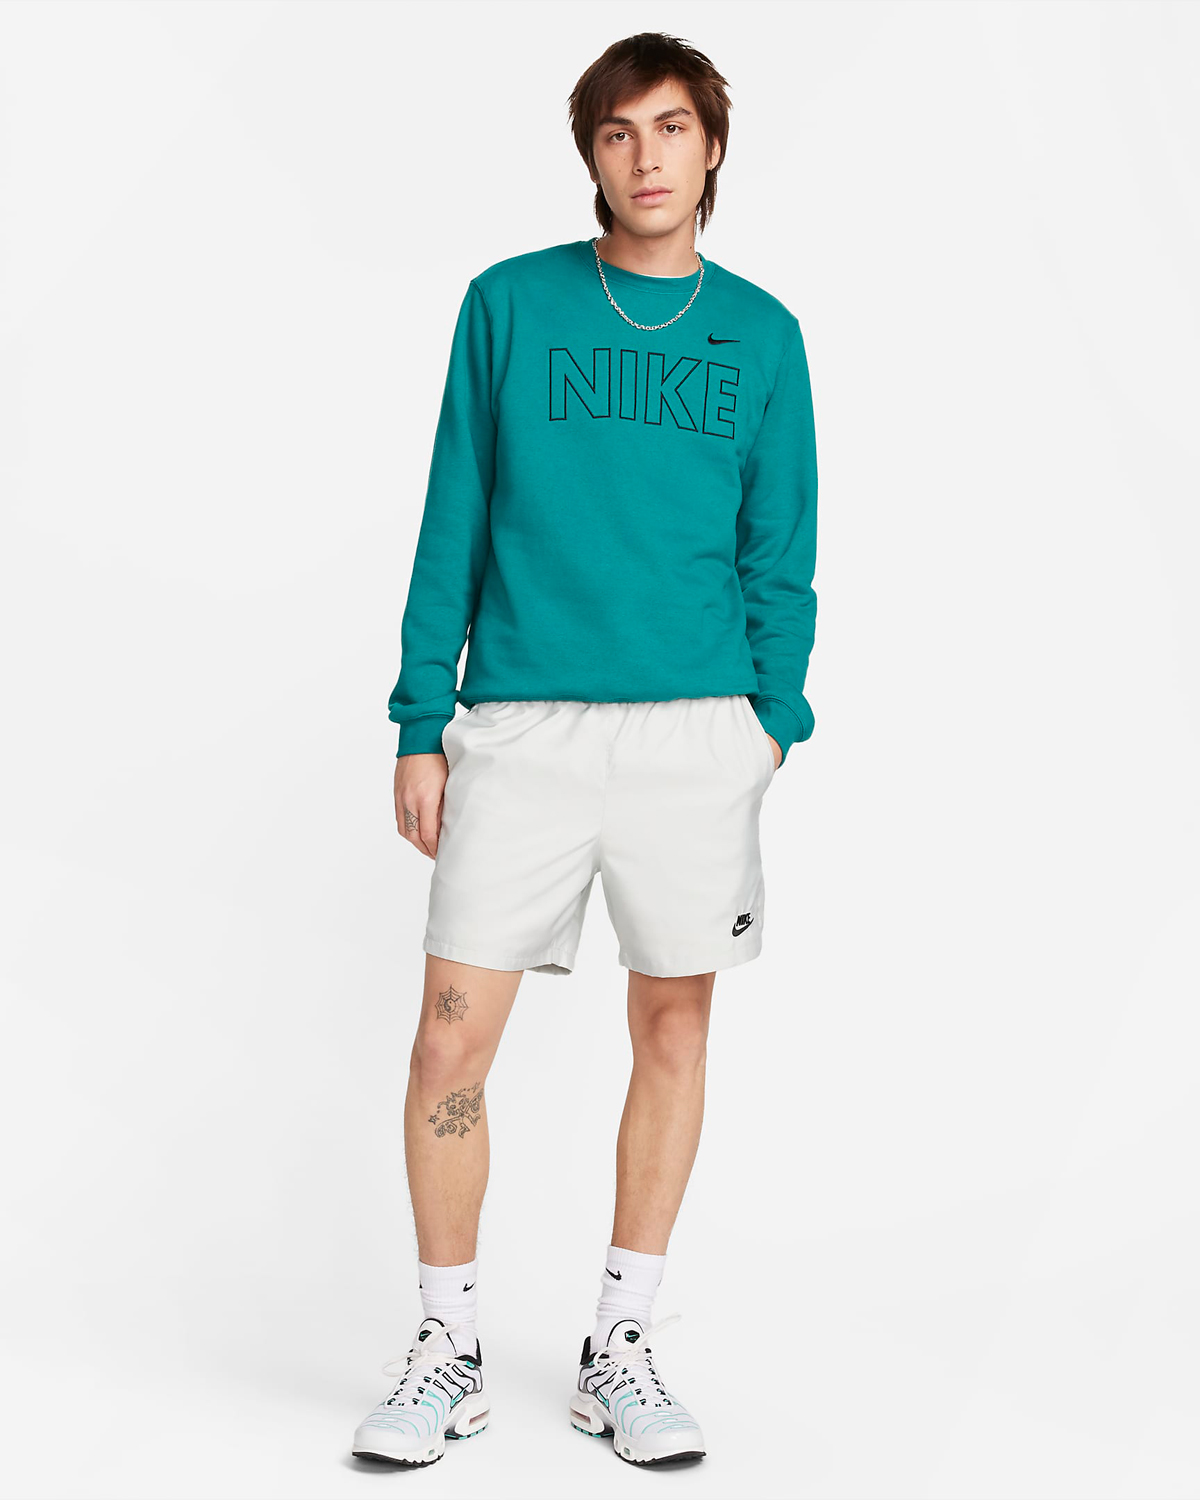 Nike-Club-Fleece-Graphic-Crew-Sweatshirt-Geode-Teal-Outfit